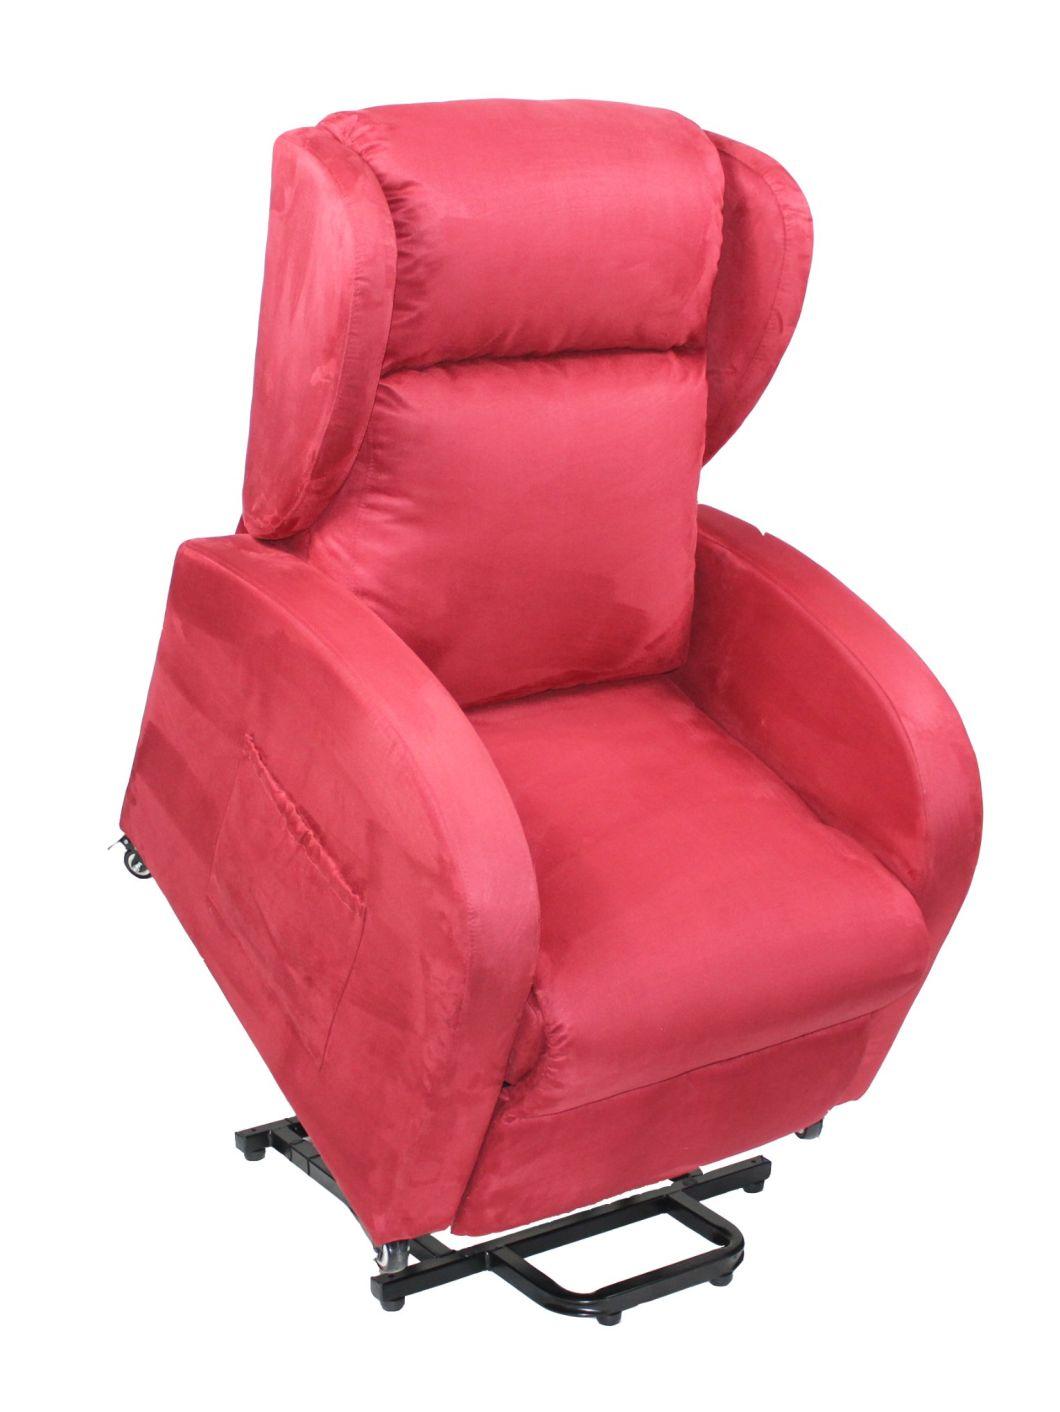 New Products Lift Recliner Chair Sofa (QT-LC-51)